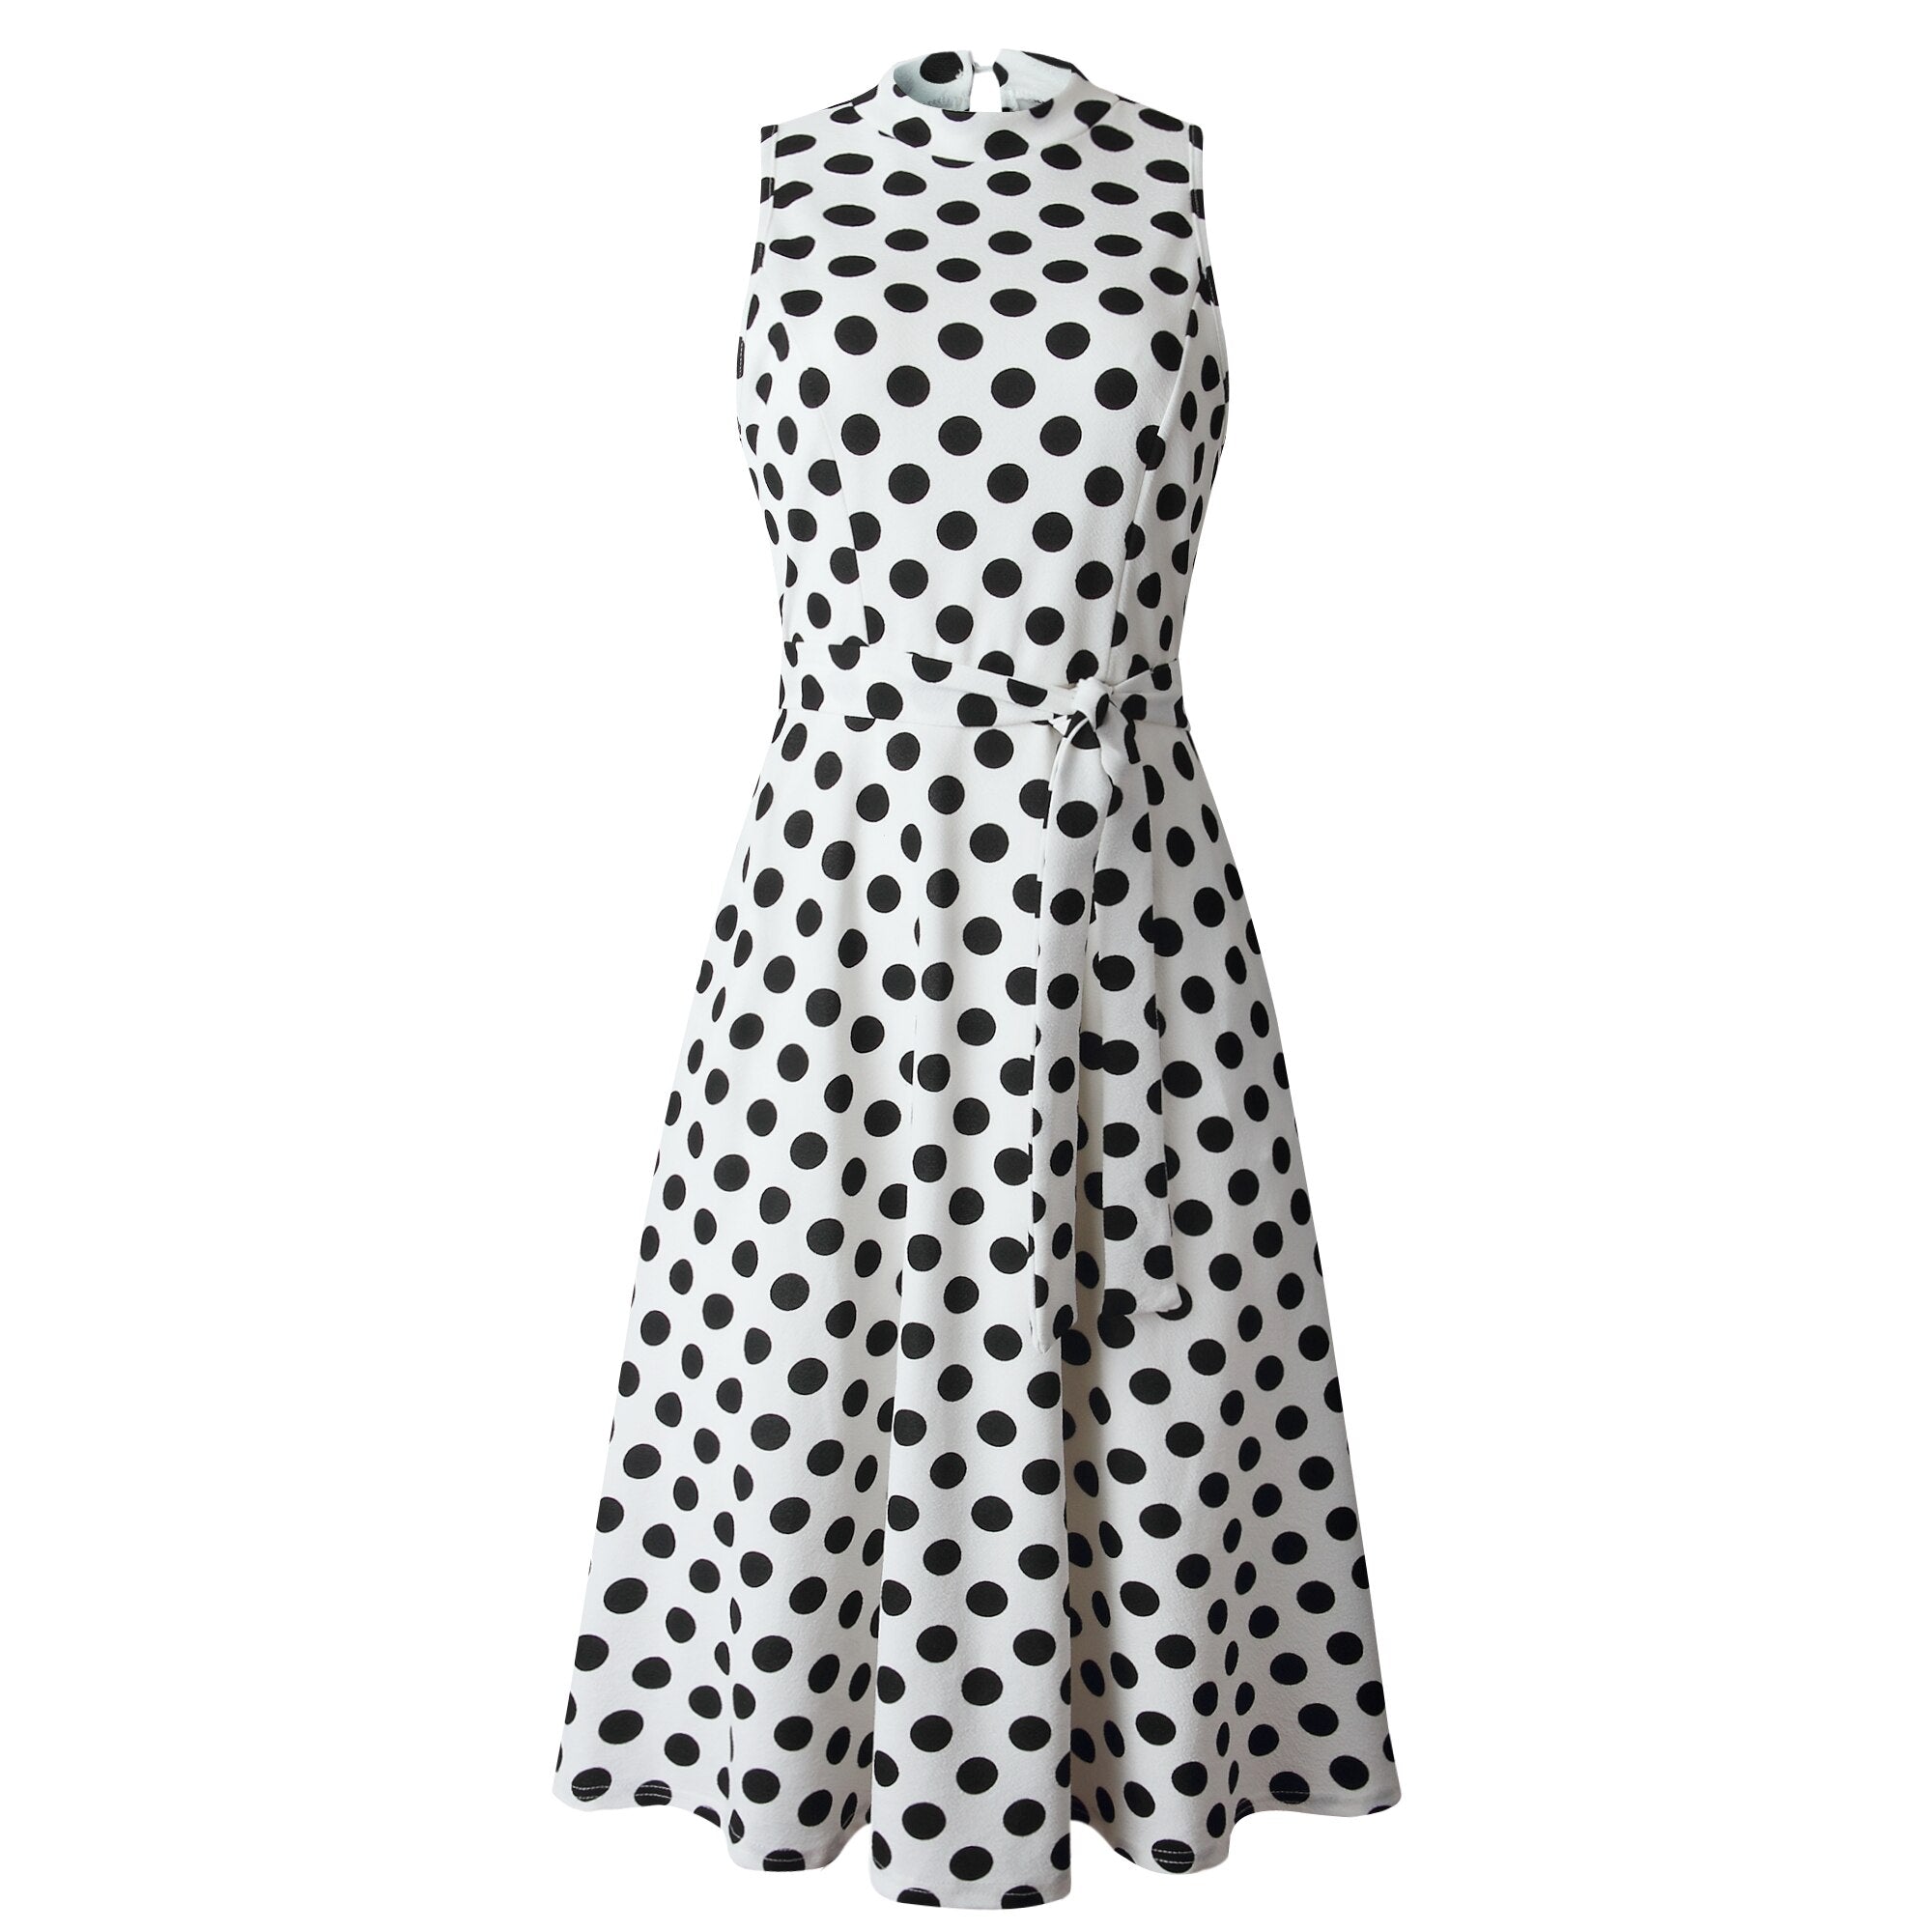 Ladies Summer Polka Dot Print Sleeveless Casual Party Loose A-line Sundress Midi Dress